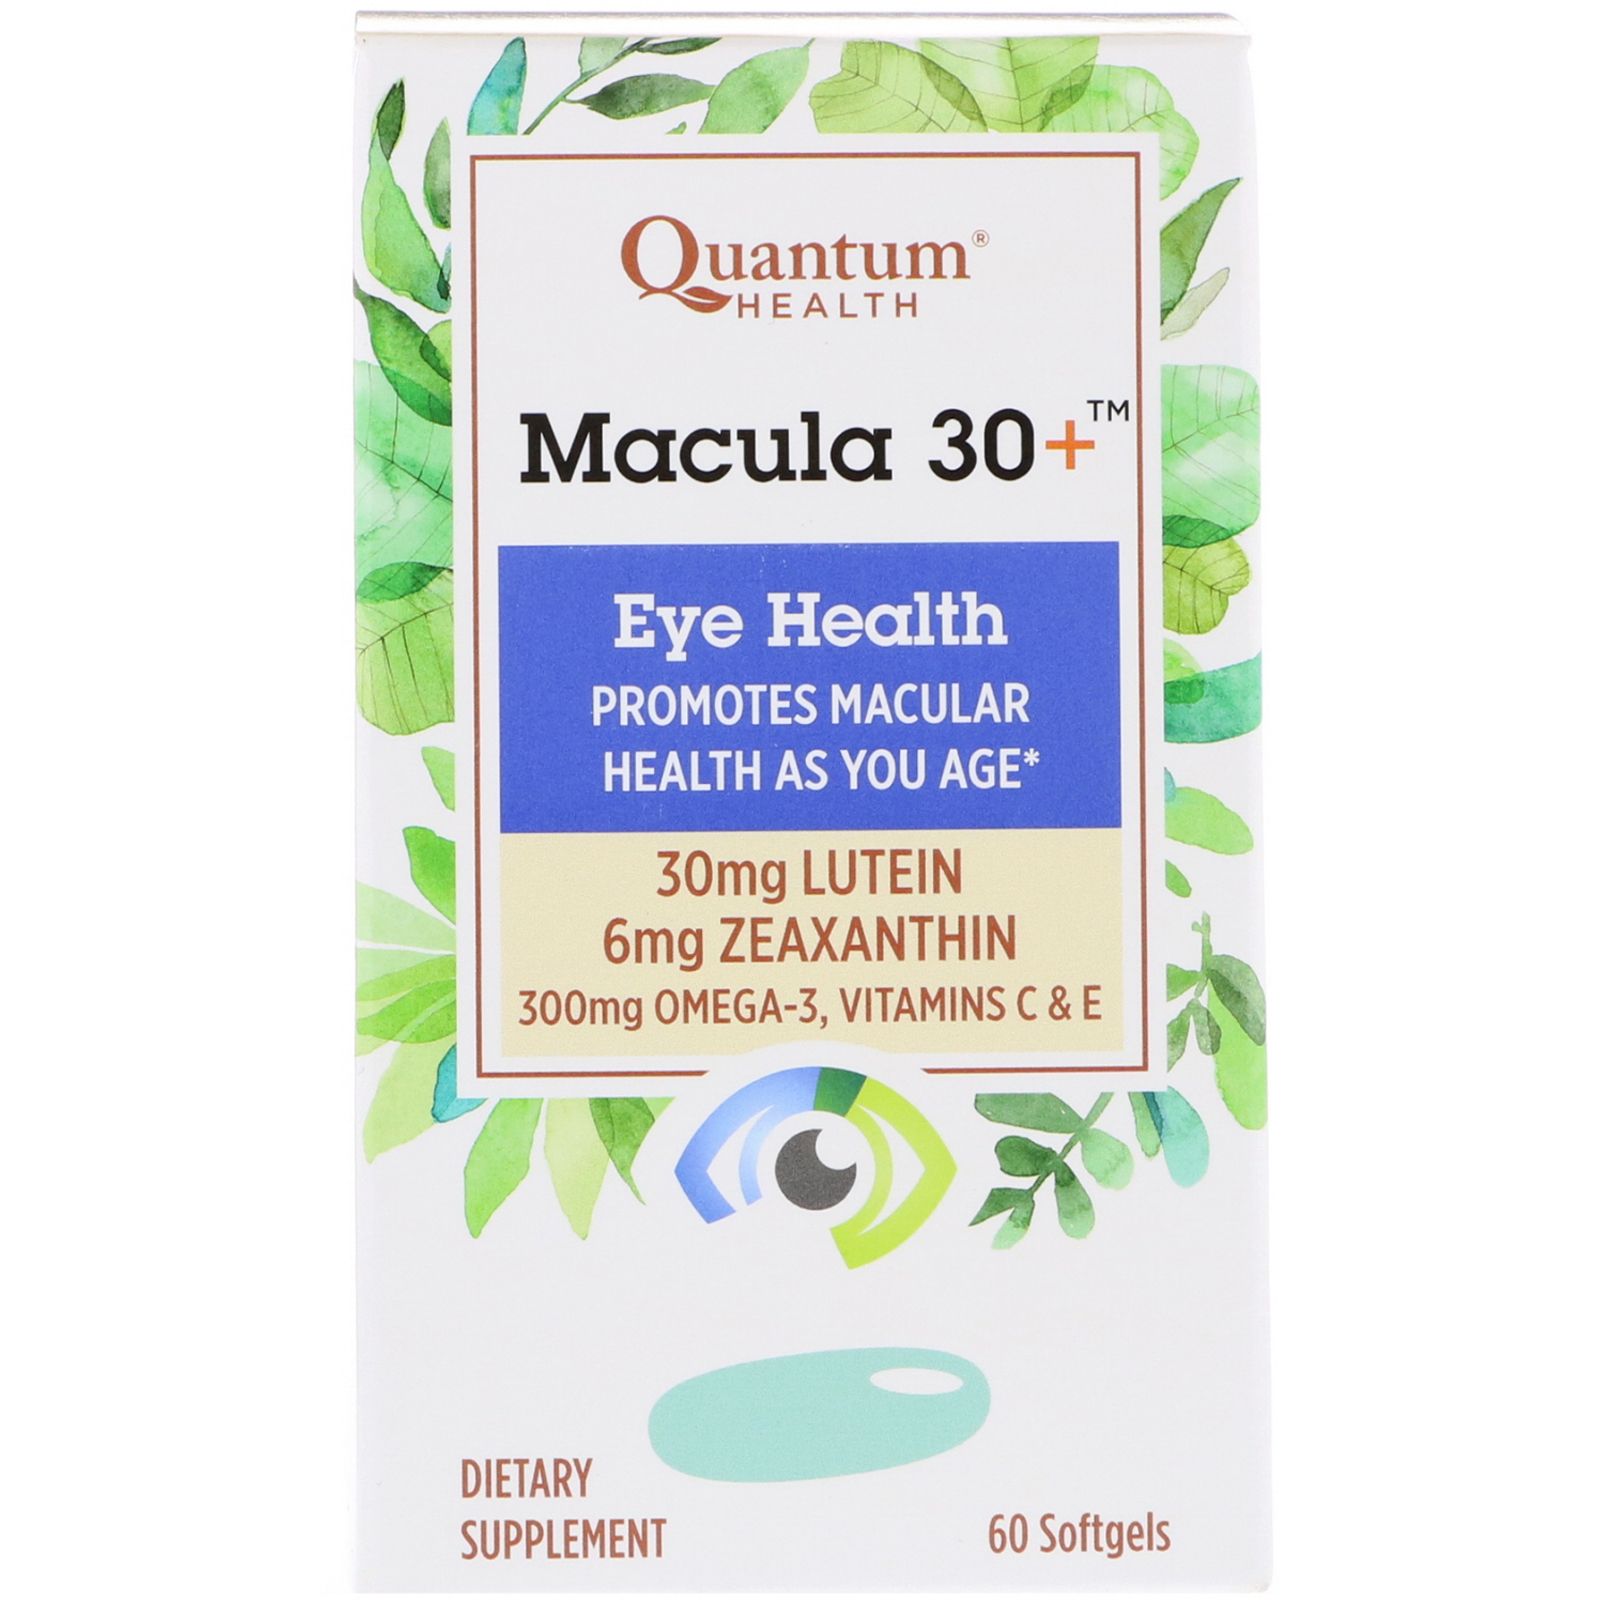 Quantum Health Macula 30+ Eye Health 60 Softgels 6th generation quantum weak magnetic resonance body analyzer sub health tester